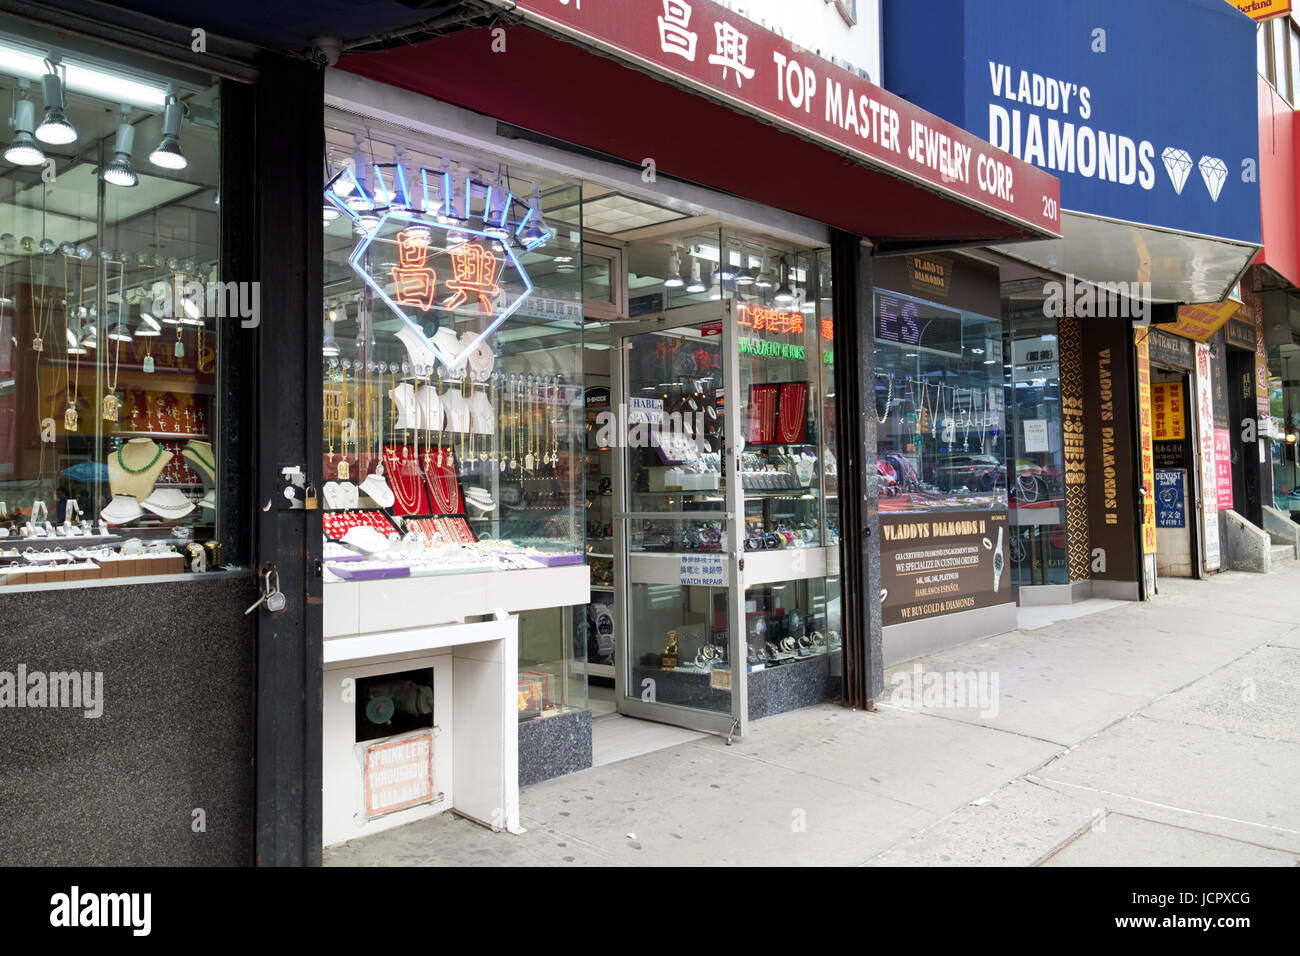 chinatown jewelry shops on canal street New York City USA Stock Photo